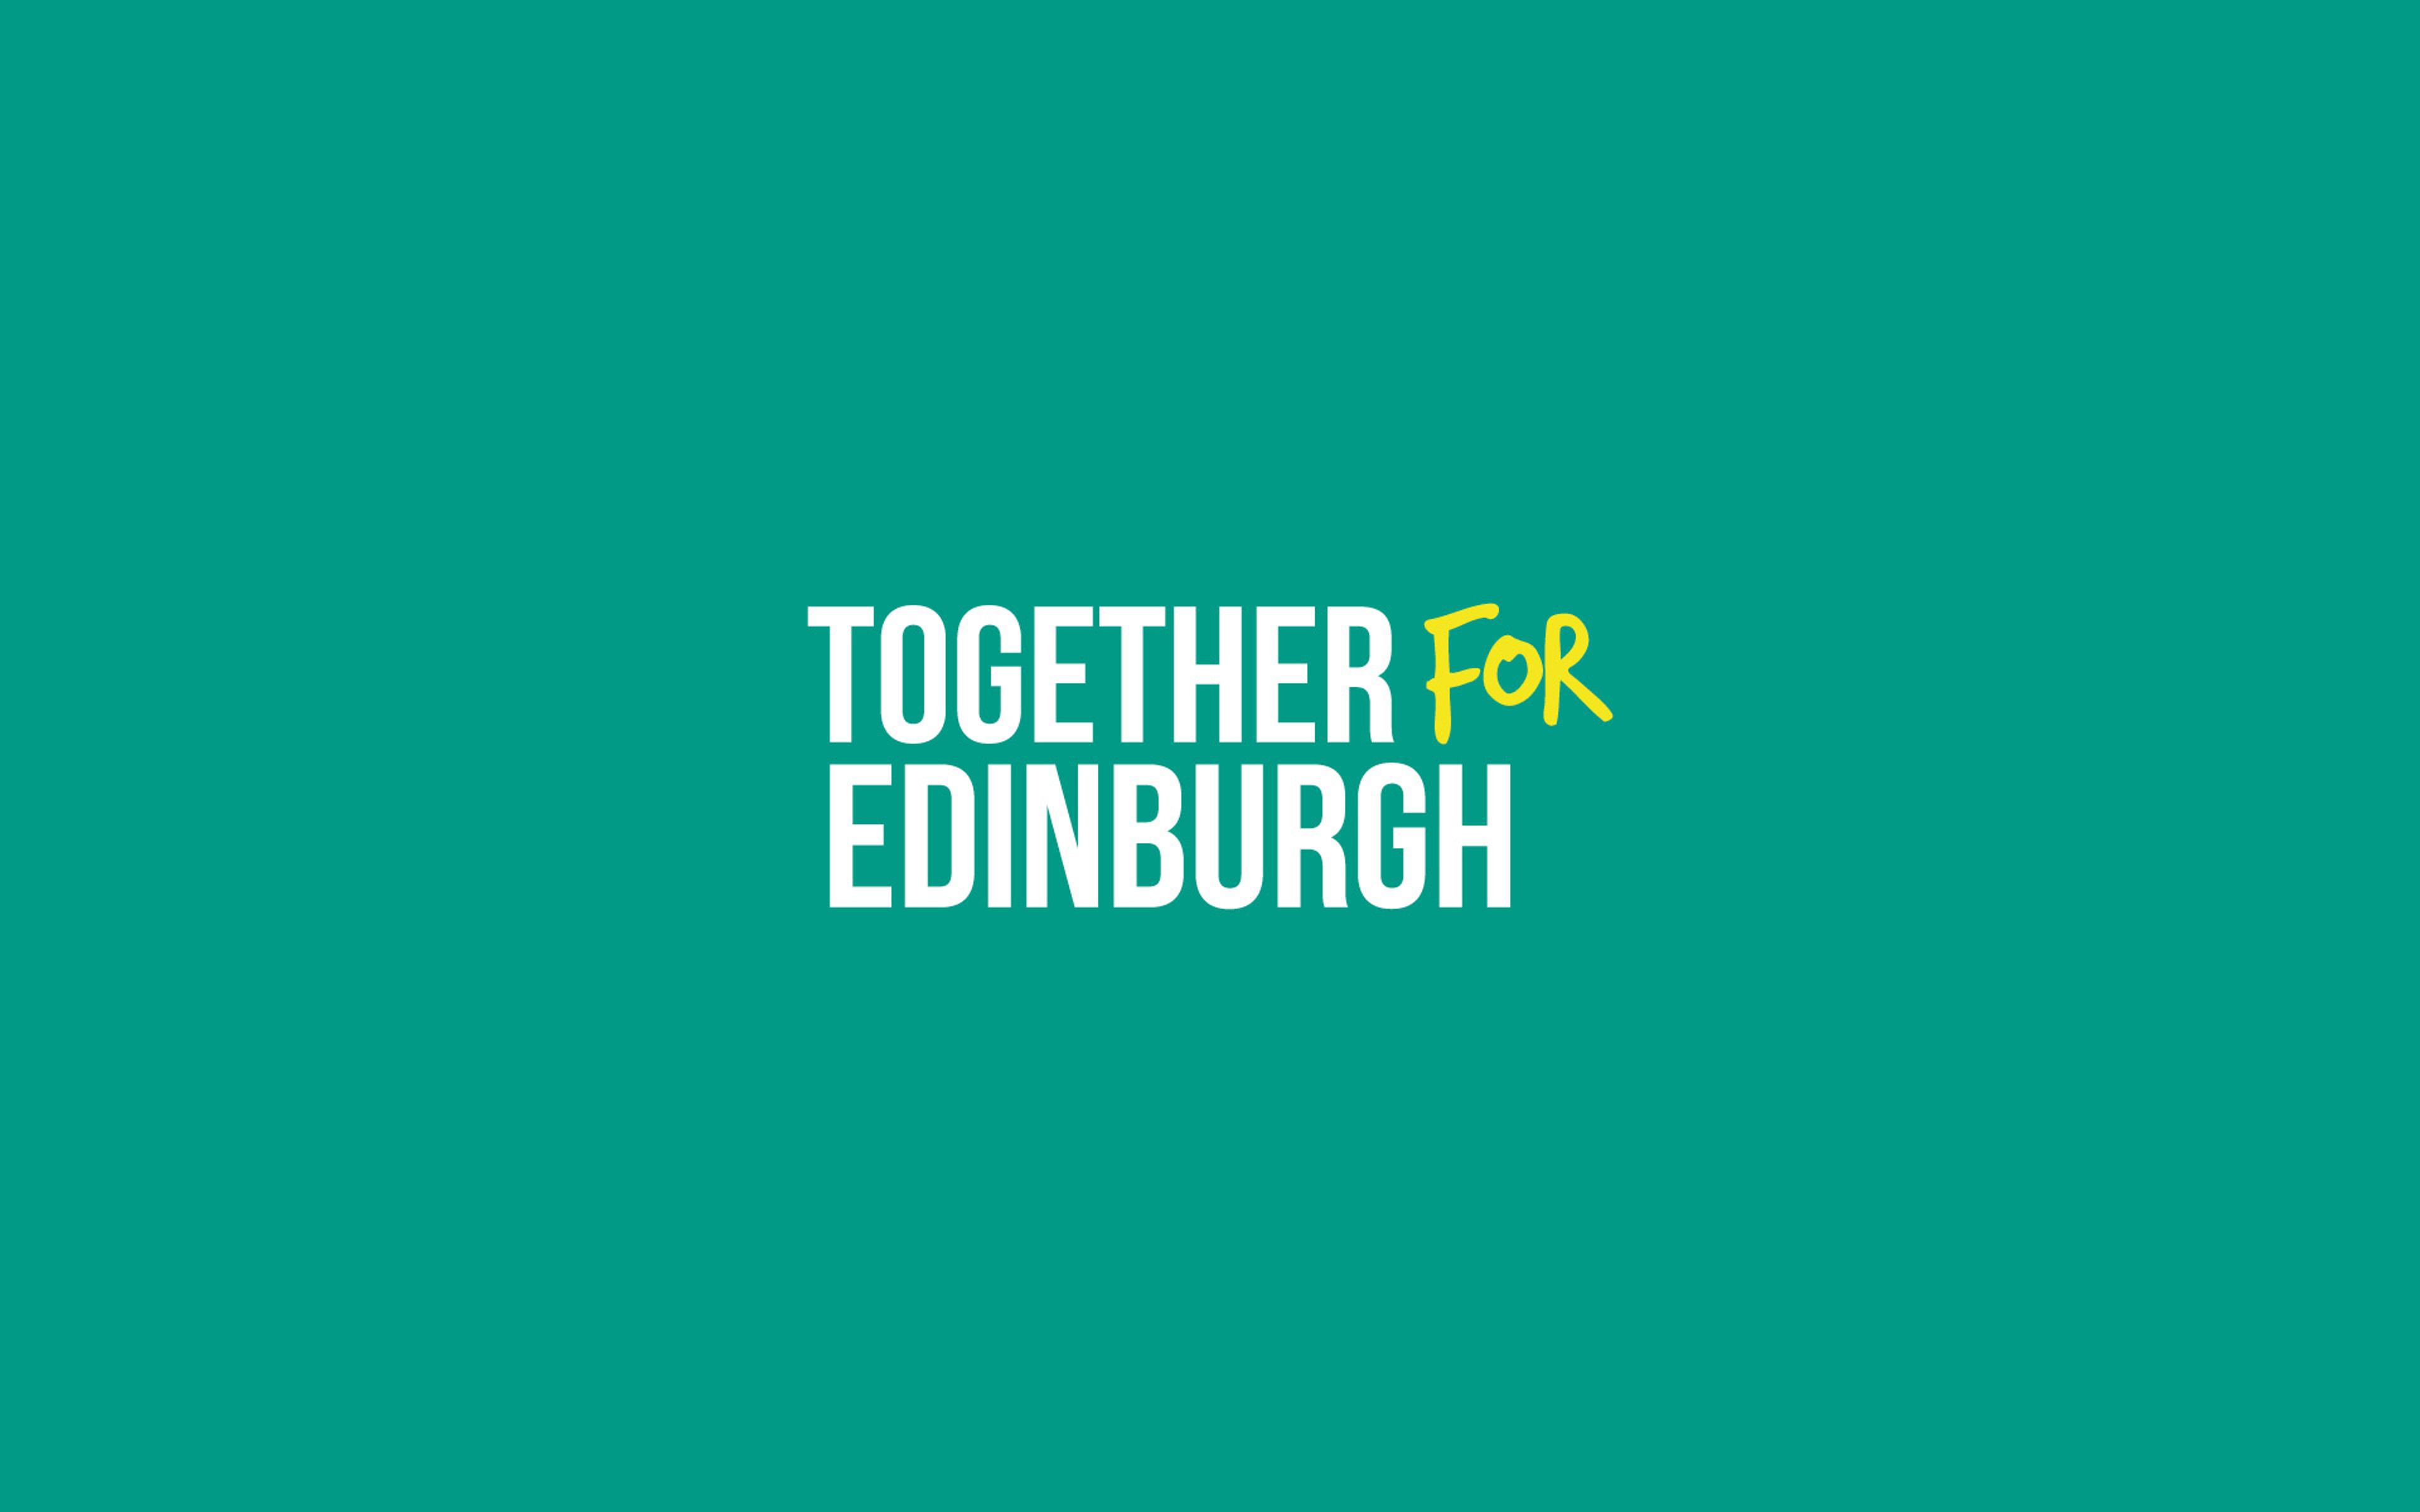 Together for Edinburgh branding